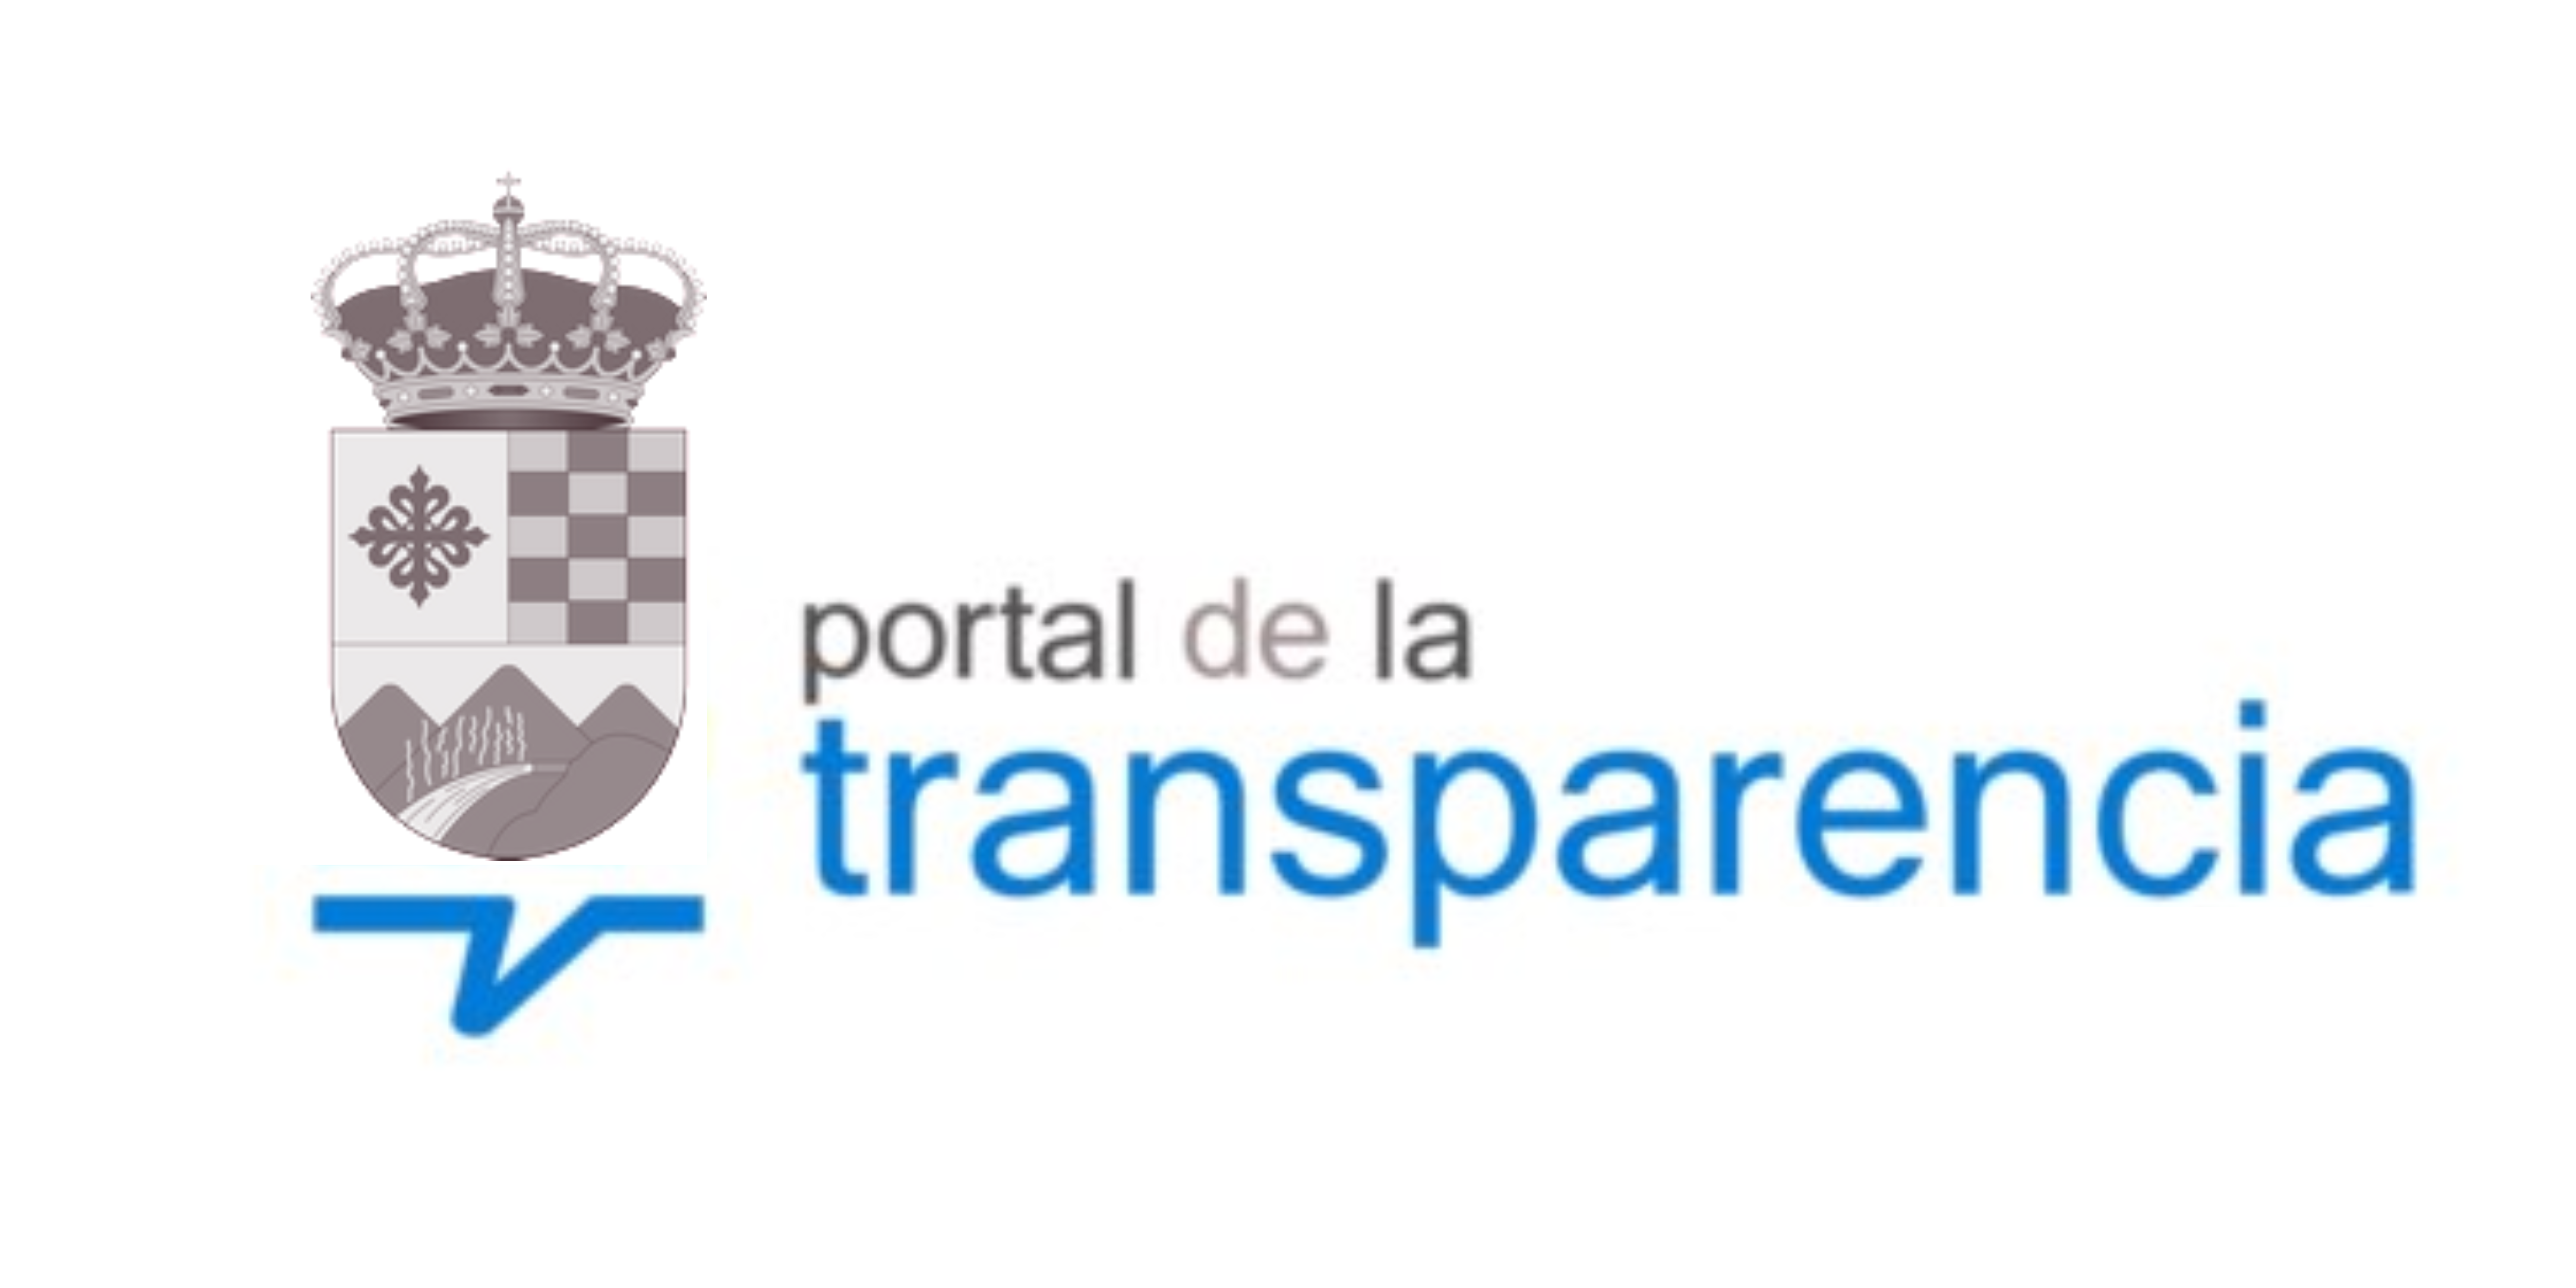 banner transparencia